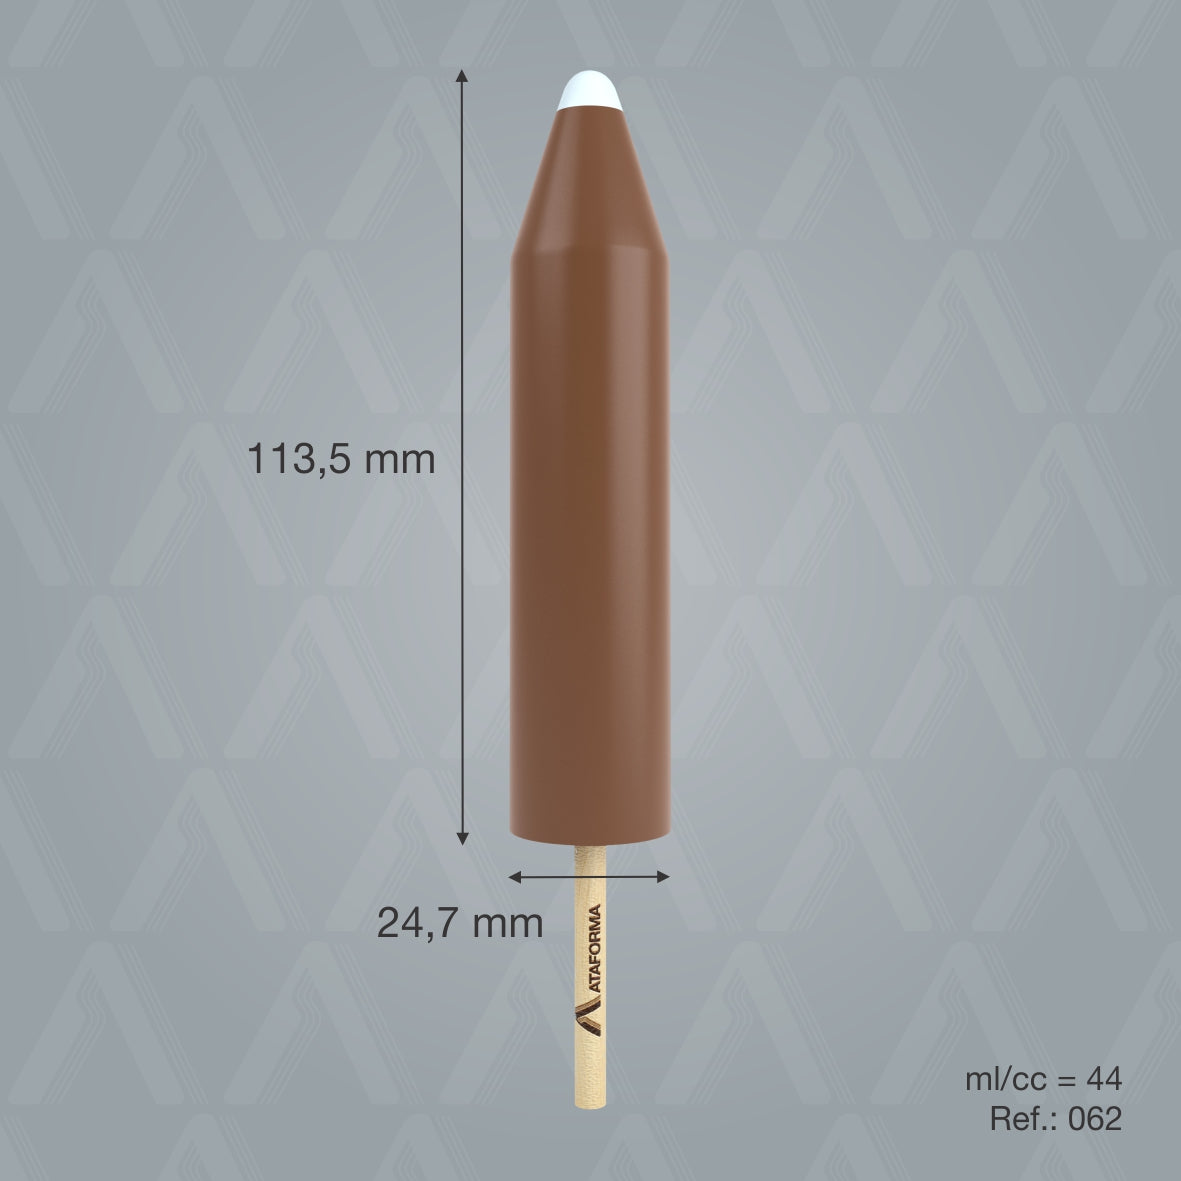 Ataforma Mold Lápis 44ml 1.5 oz 22 cavities (1-6 molds pricing)